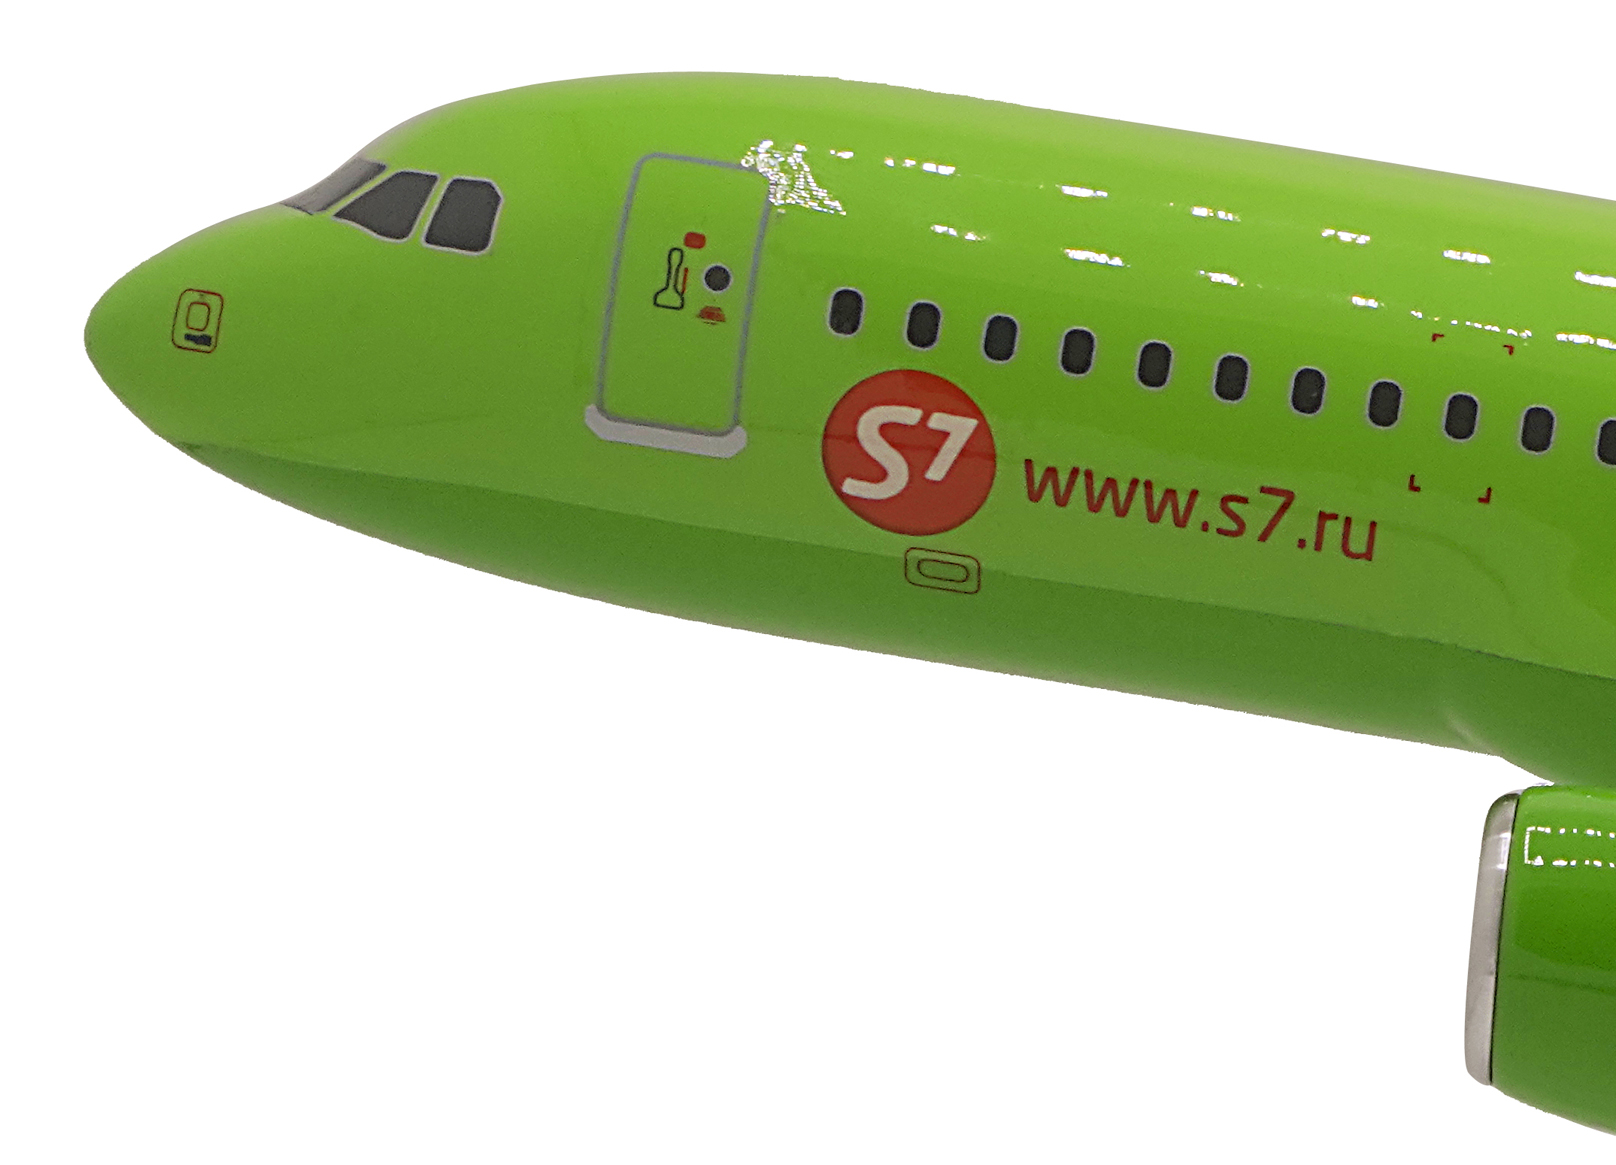    A-320   (S7 Airlines),  1:100,   37,5 . # 8 hobbyplus.ru